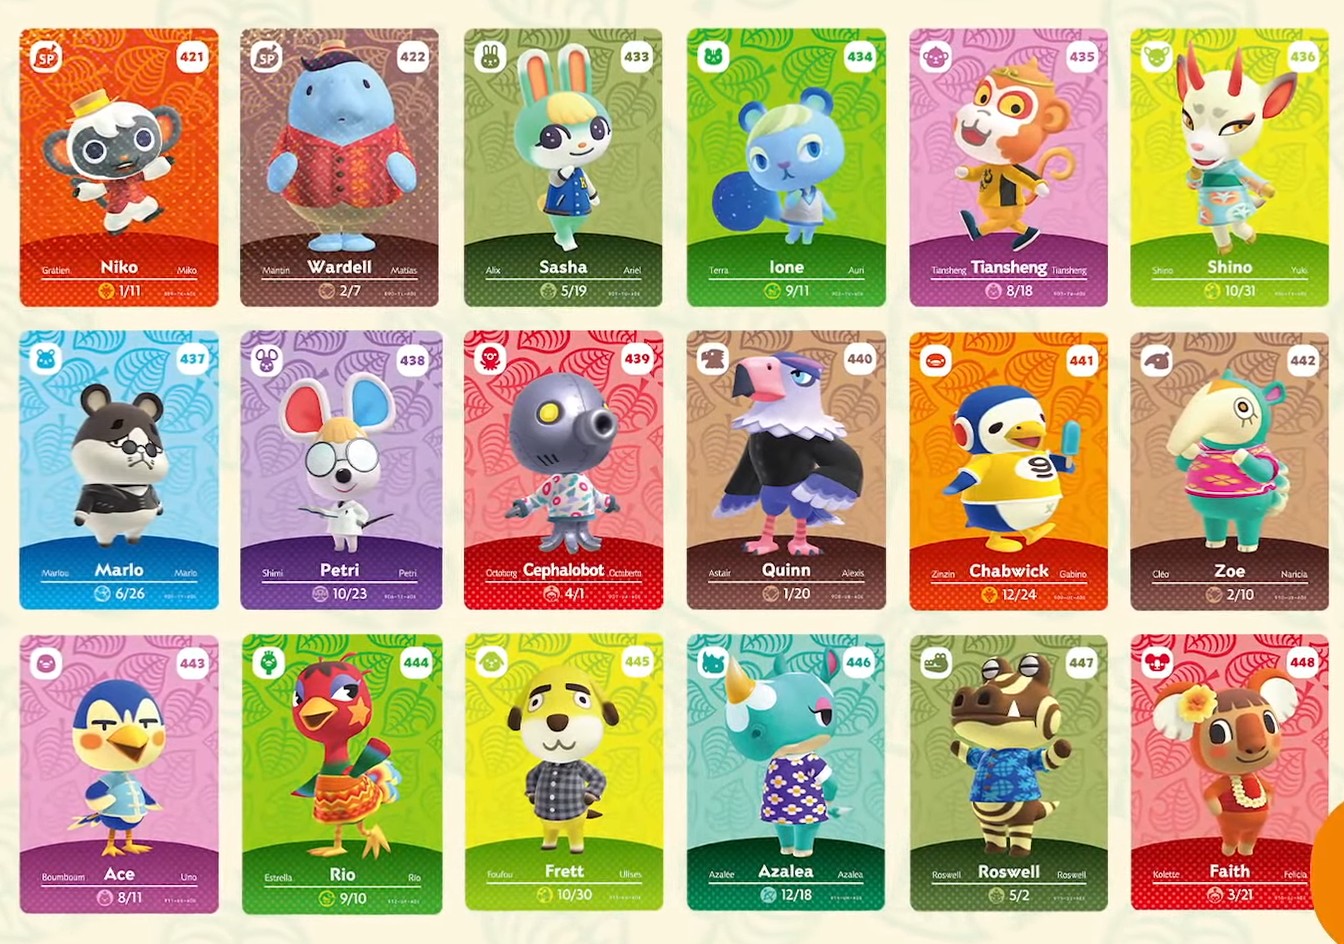 Cartes amiibo Animal Crossing série 5 : où les acheter ? - Nintendo Switch  - Nintendo-Master